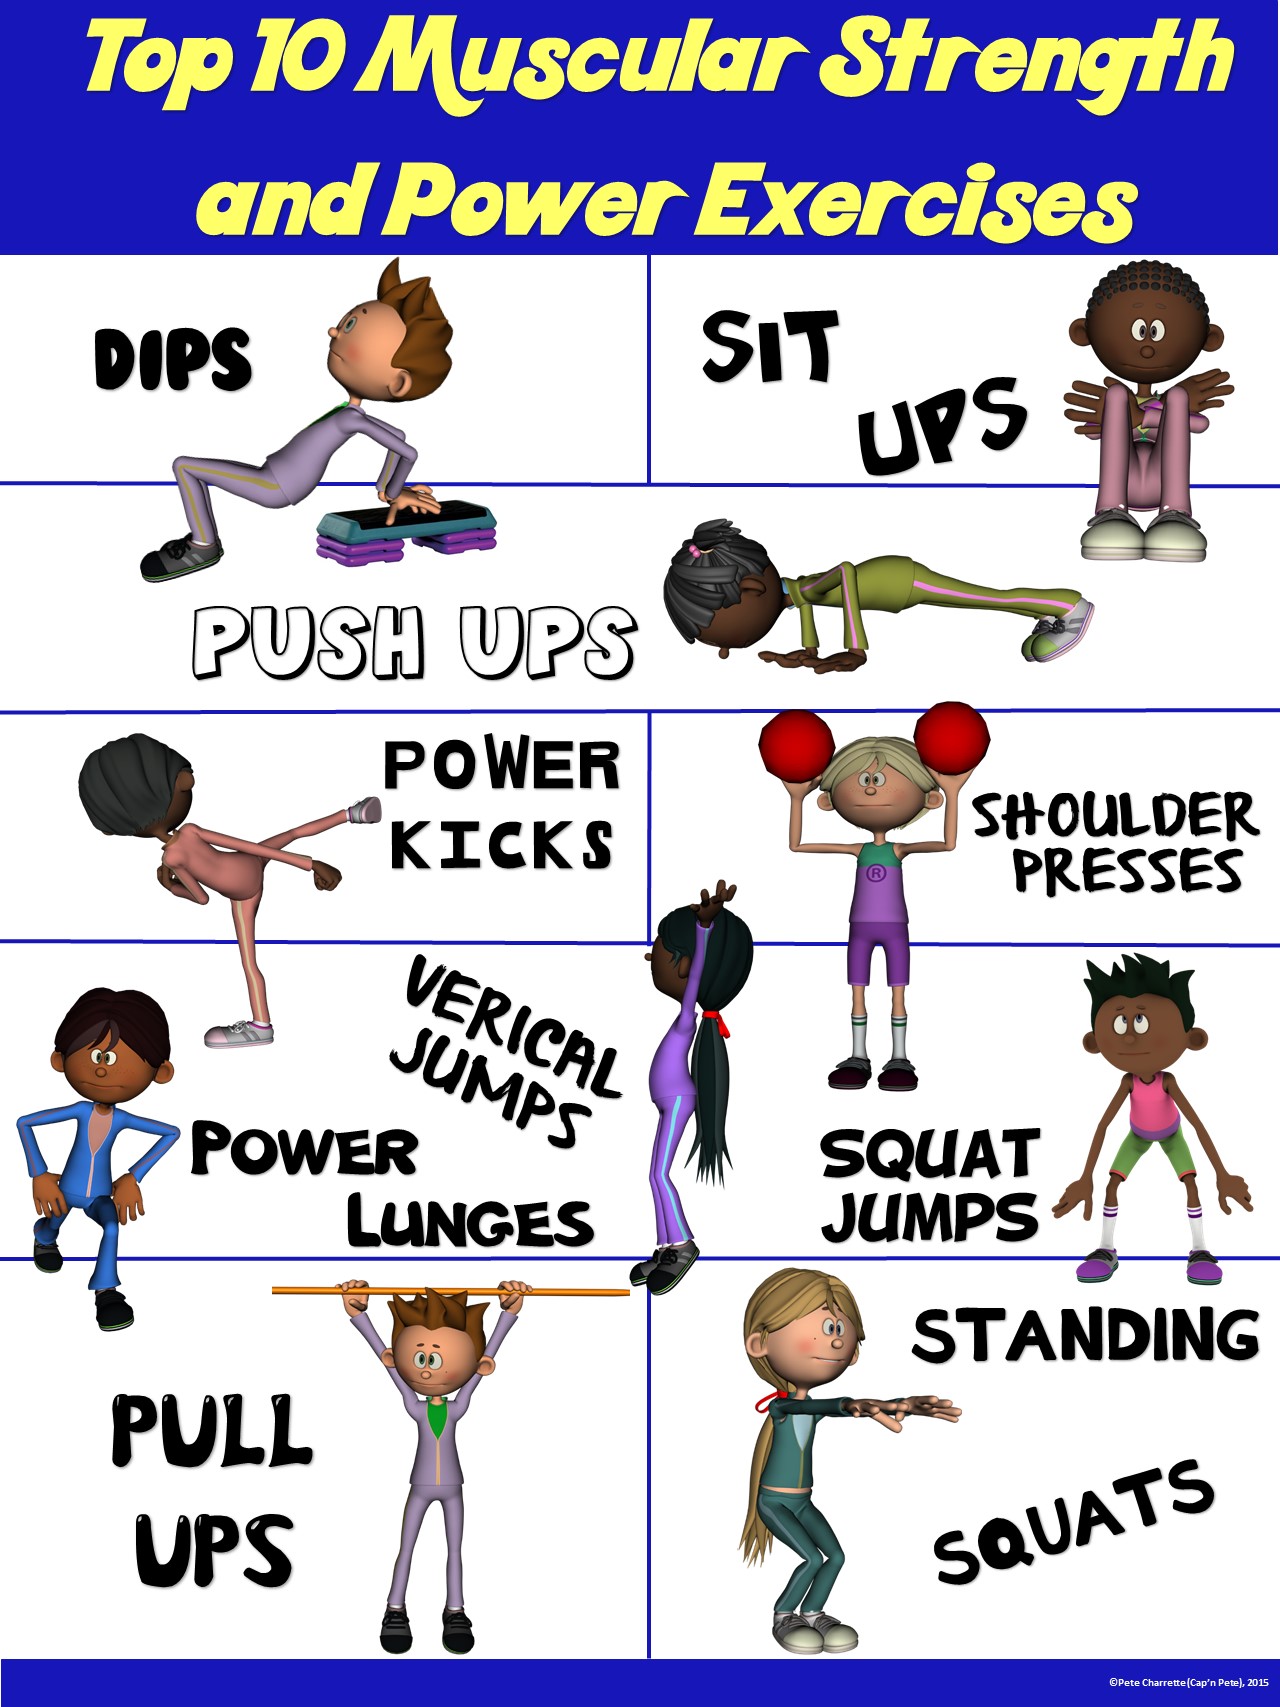 PE Poster: Top 10 Muscular Endurance Exercises.